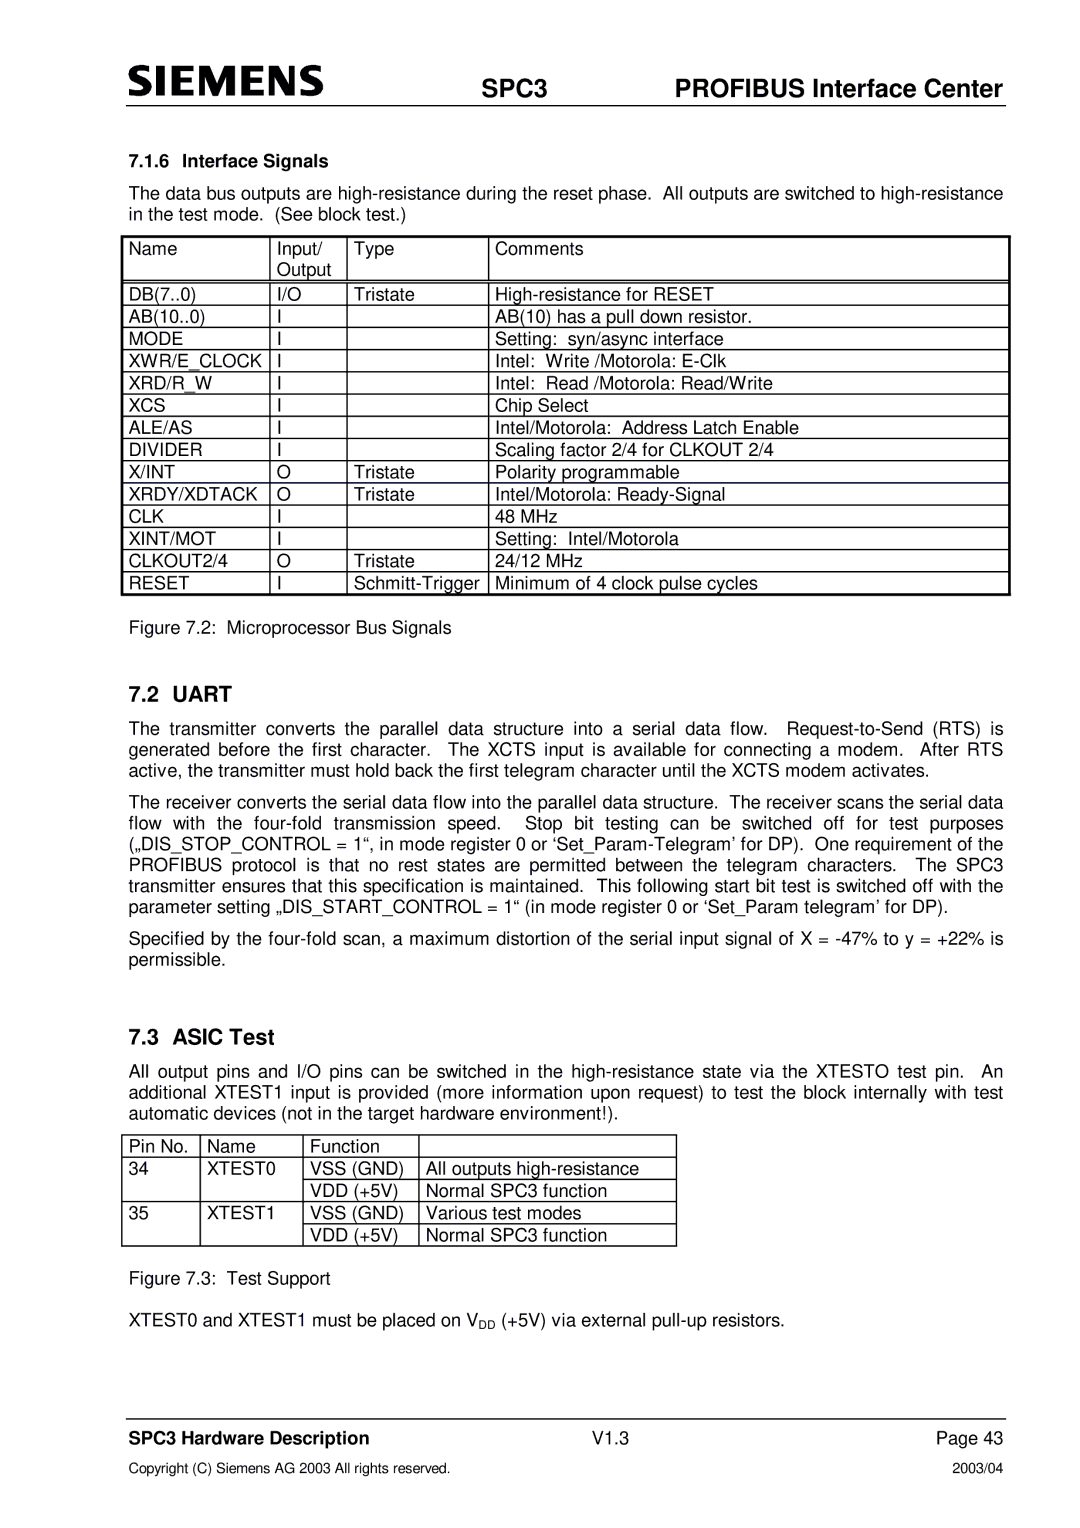 Siemens SPC3 manual Uart, Asic Test, Interface Signals 